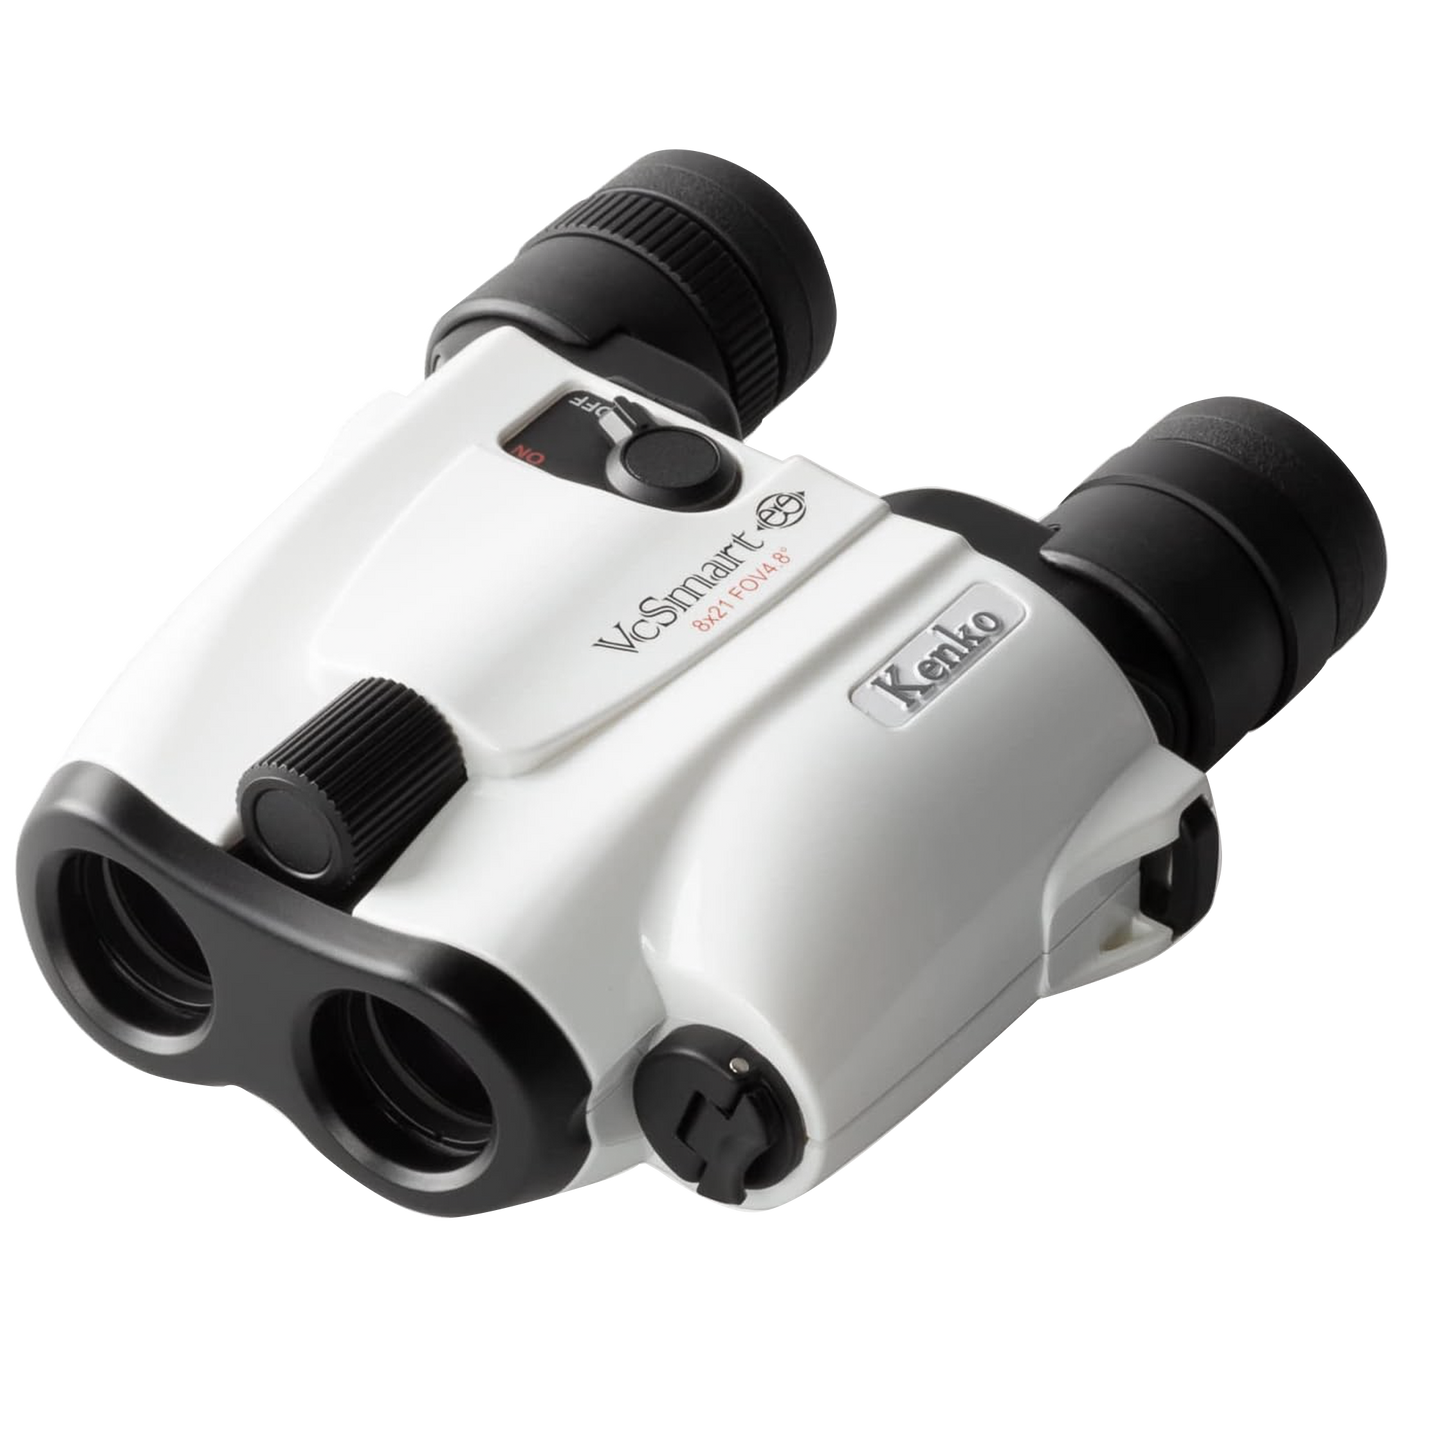 Kenko Vibration Control Binocular, VC Smart Compact 8x21 / 12x21, White/Black